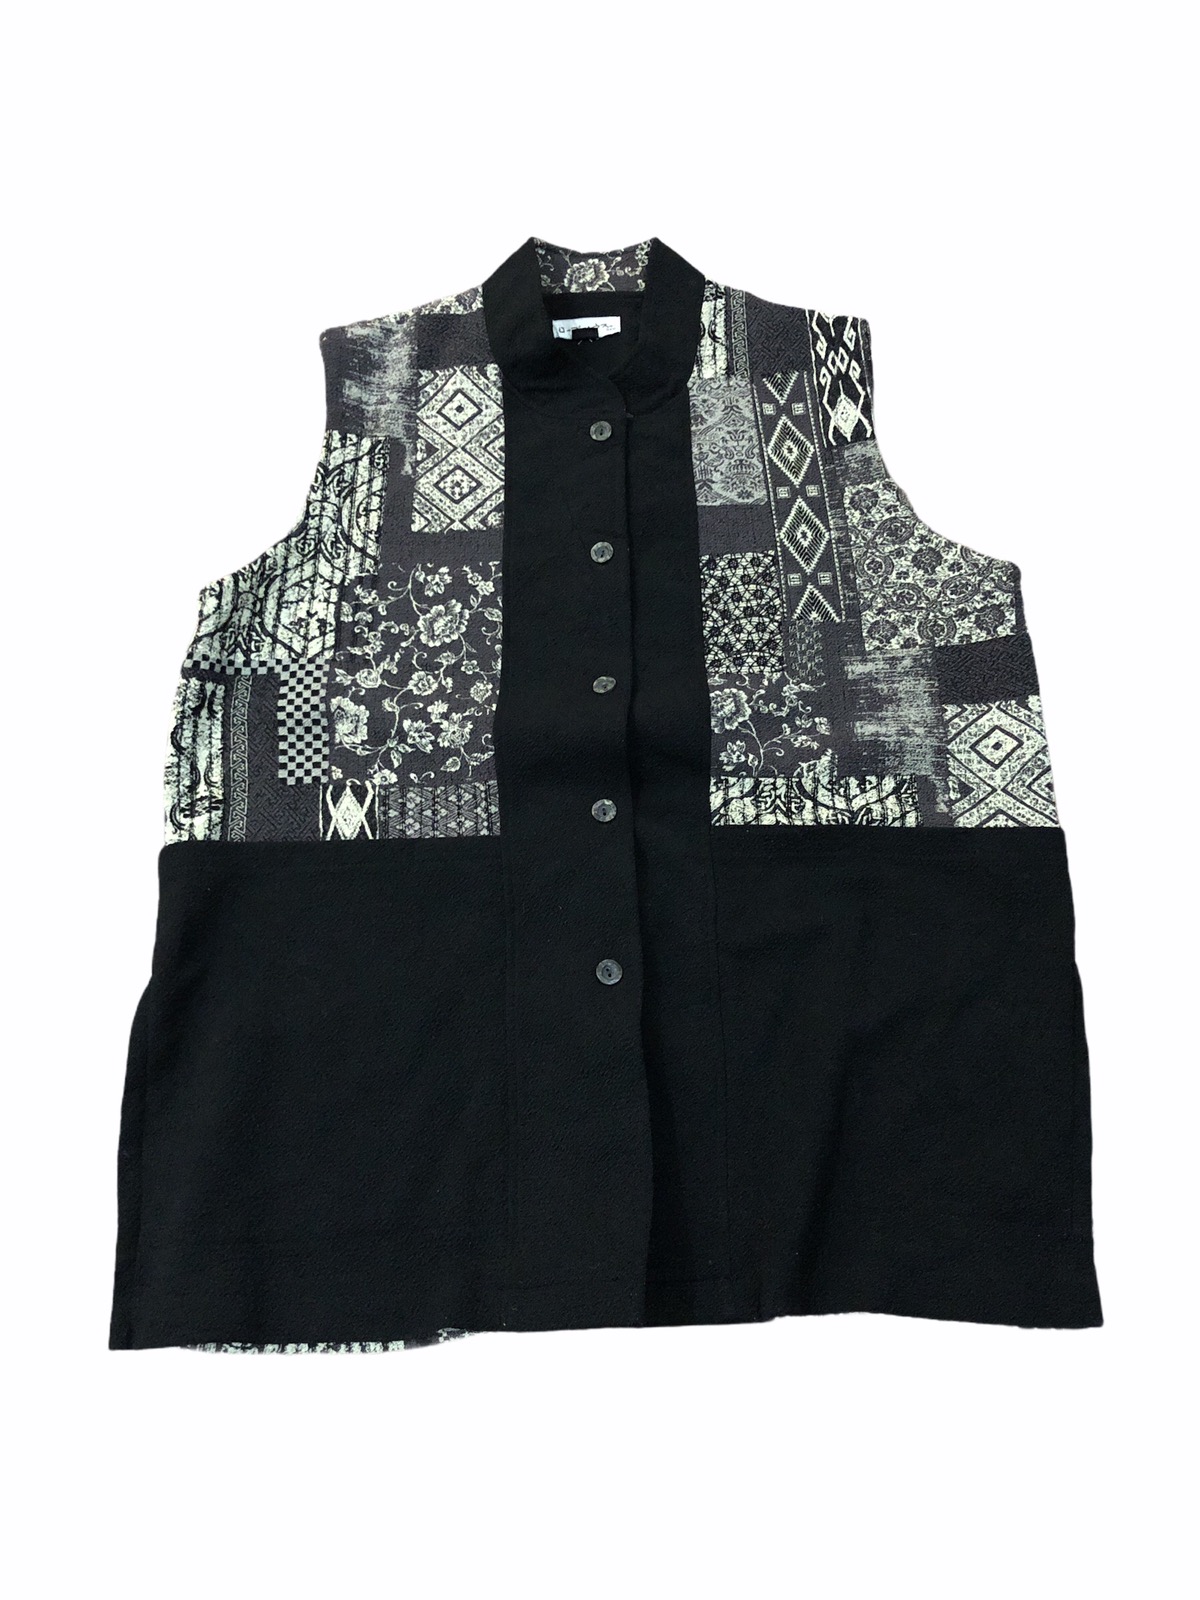 Japanese Brand - Japanese Traditional Vest Abstract Jacket Kapital Design - 1